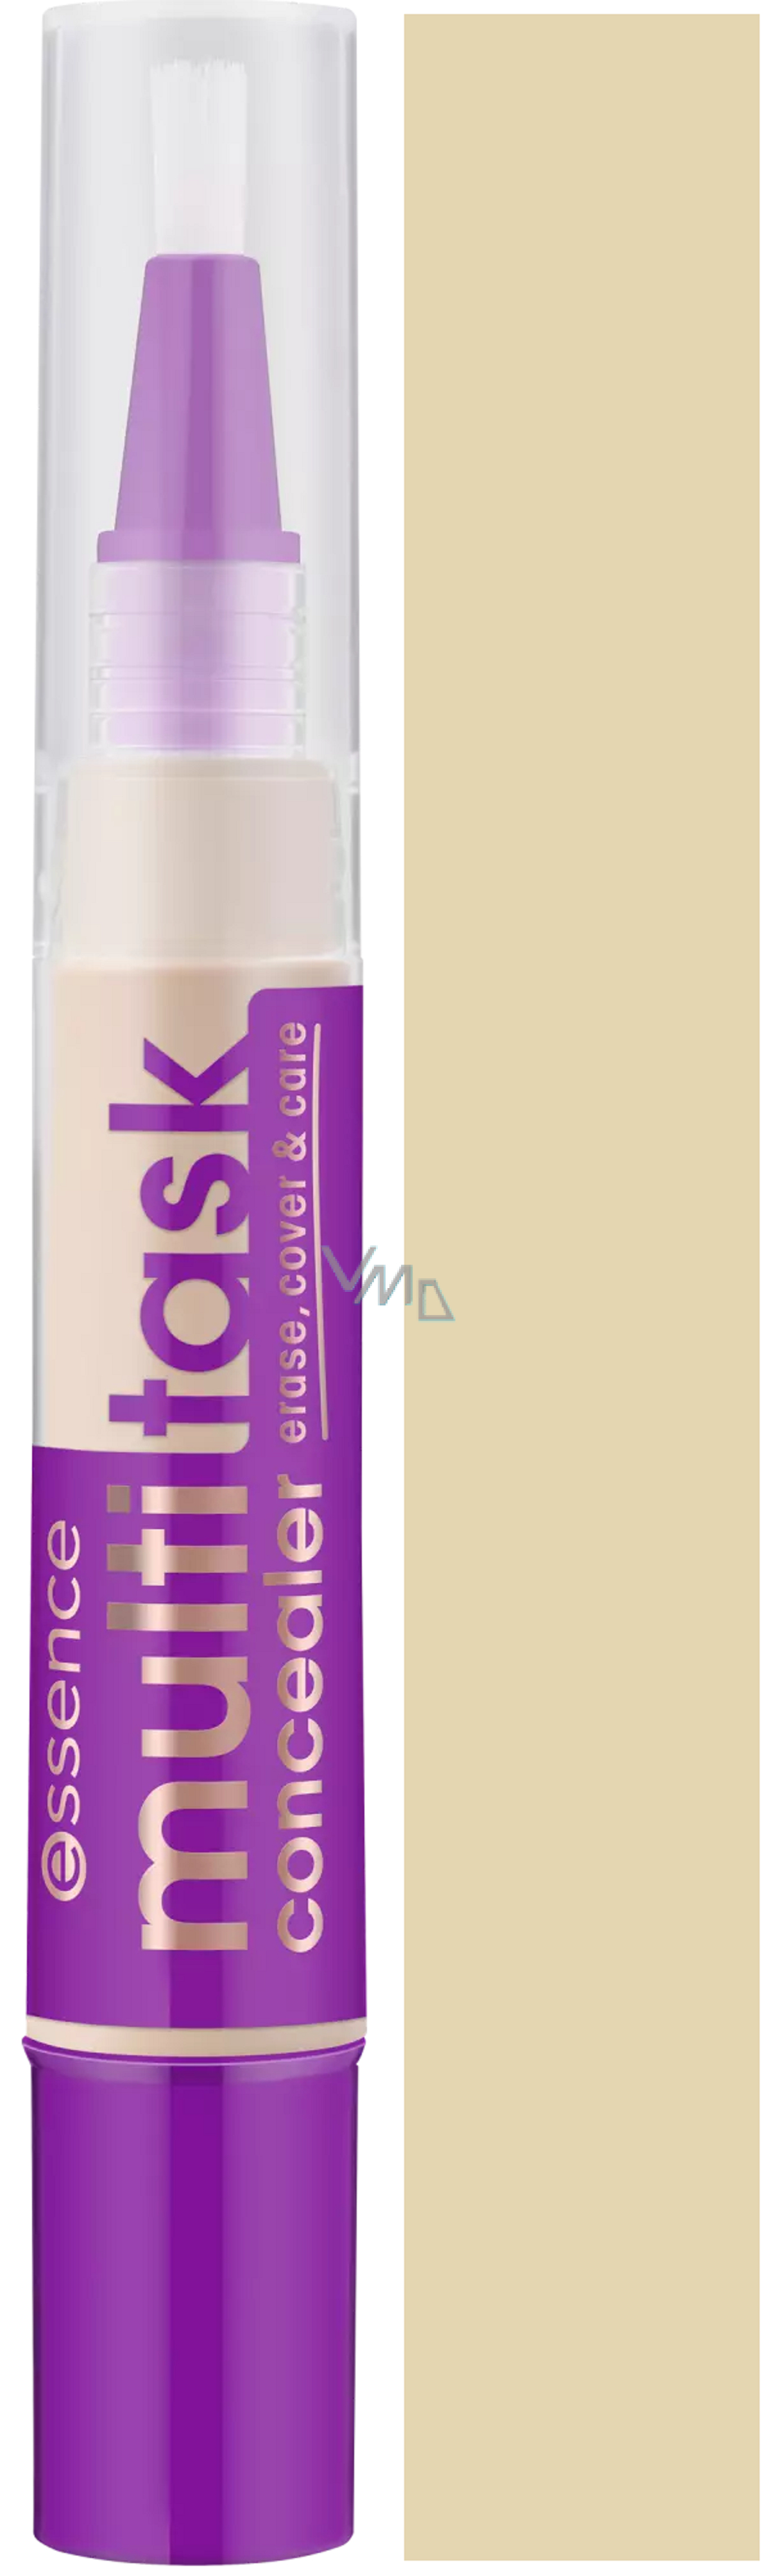 Essence Multitask Liquid Concealer - 15 3 Nude Natural ml - parfumerie drogerie VMD